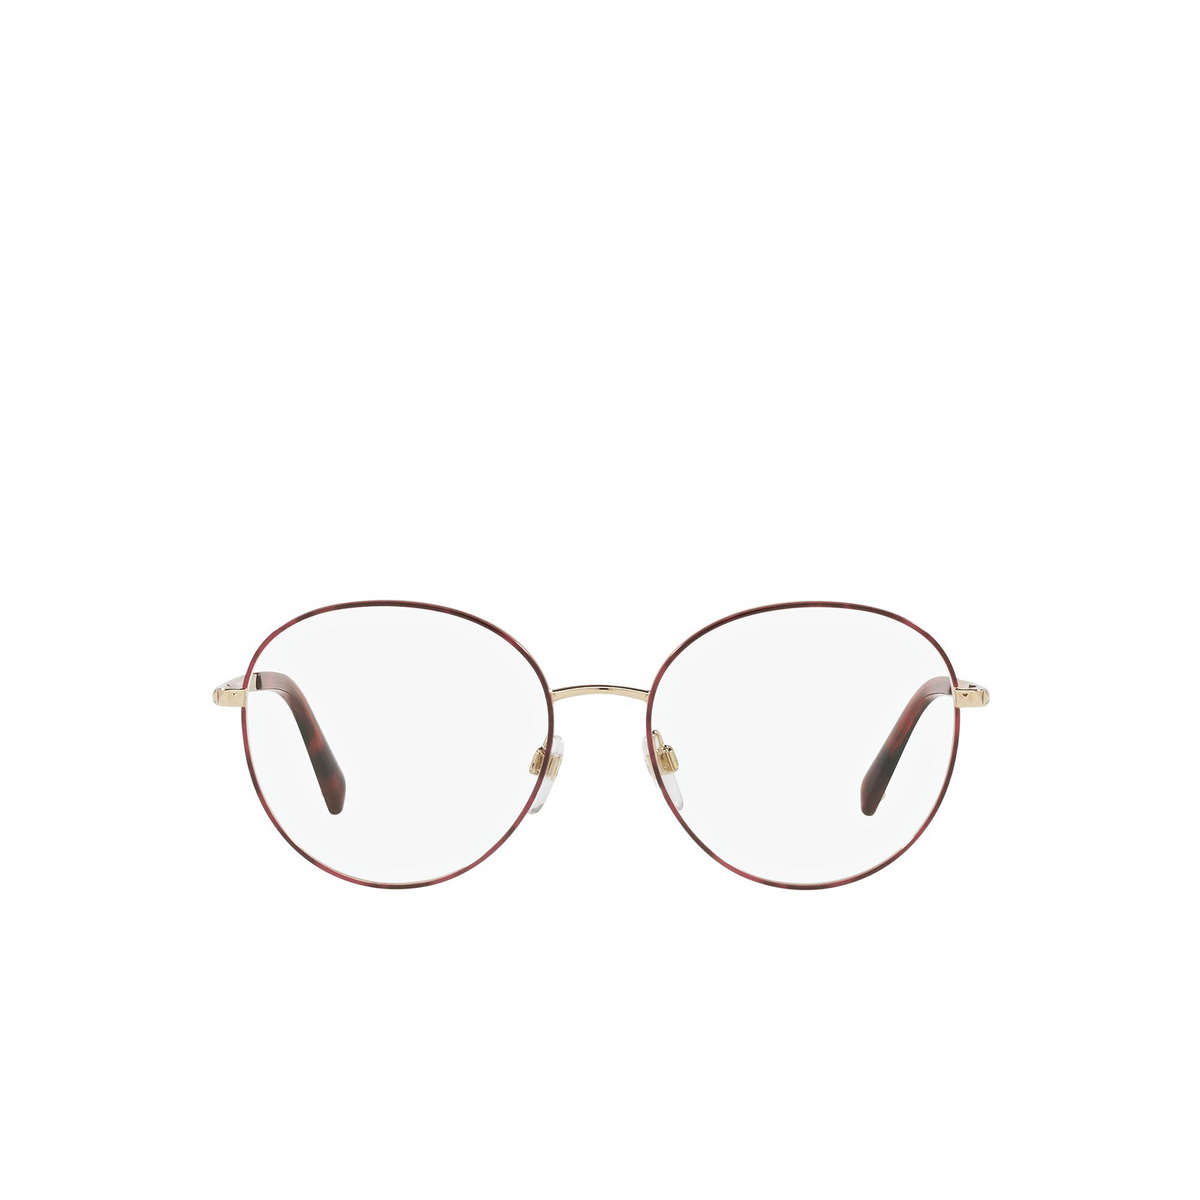 Valentino® Round Sunglasses: VA1025 color Red Havana / Light Gold 3068 - front view.